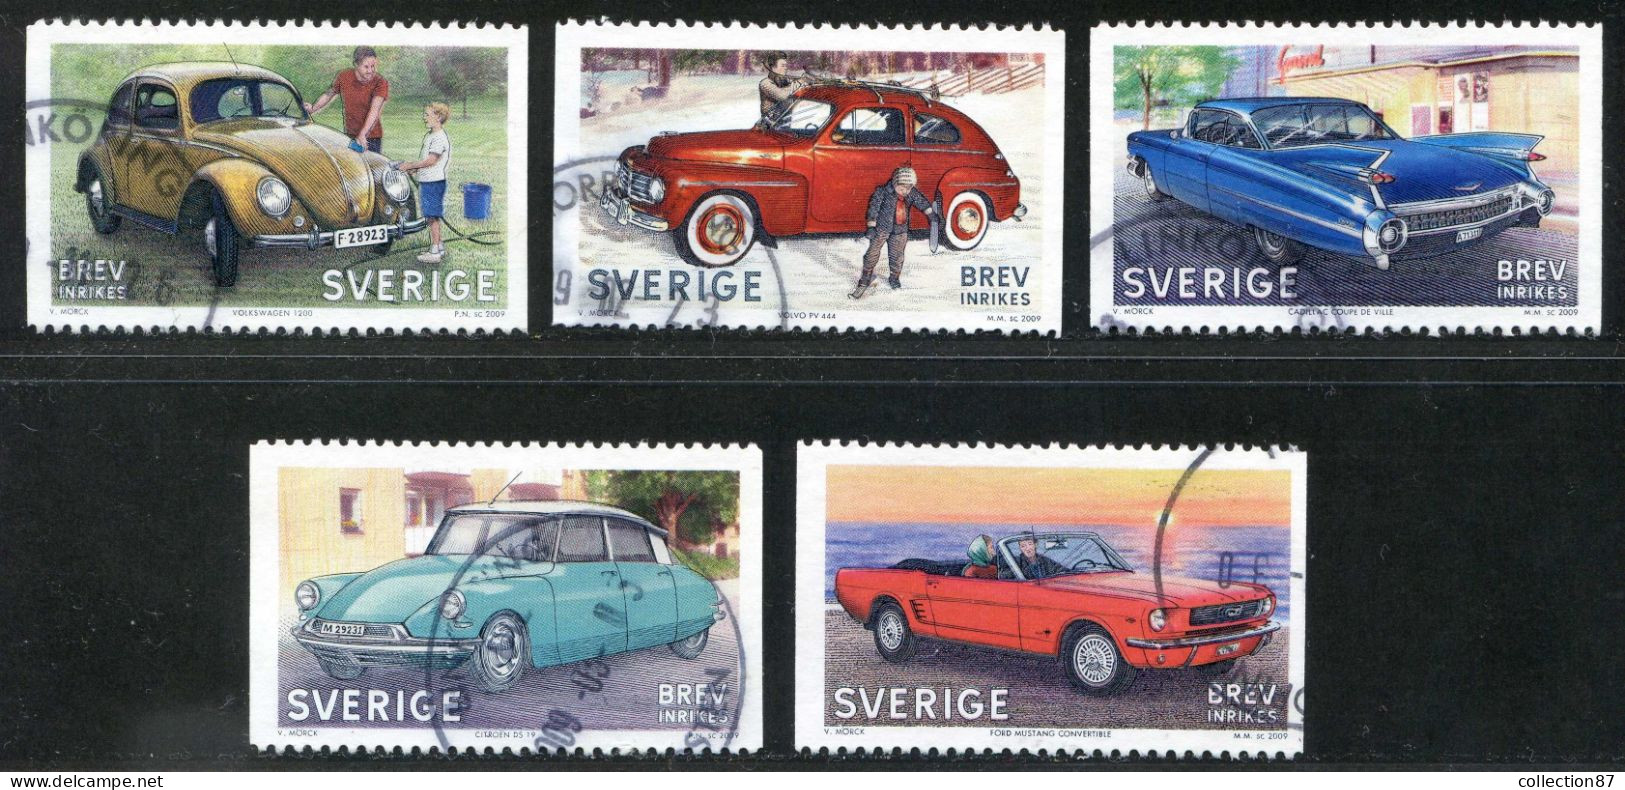 Réf 77 < SUEDE Année 2009 < Yvert N° 2659 à 2663  Ø Used < SWEDEN < Voiture Automobile < DS Citroen Coccinelle Cadillac - Used Stamps